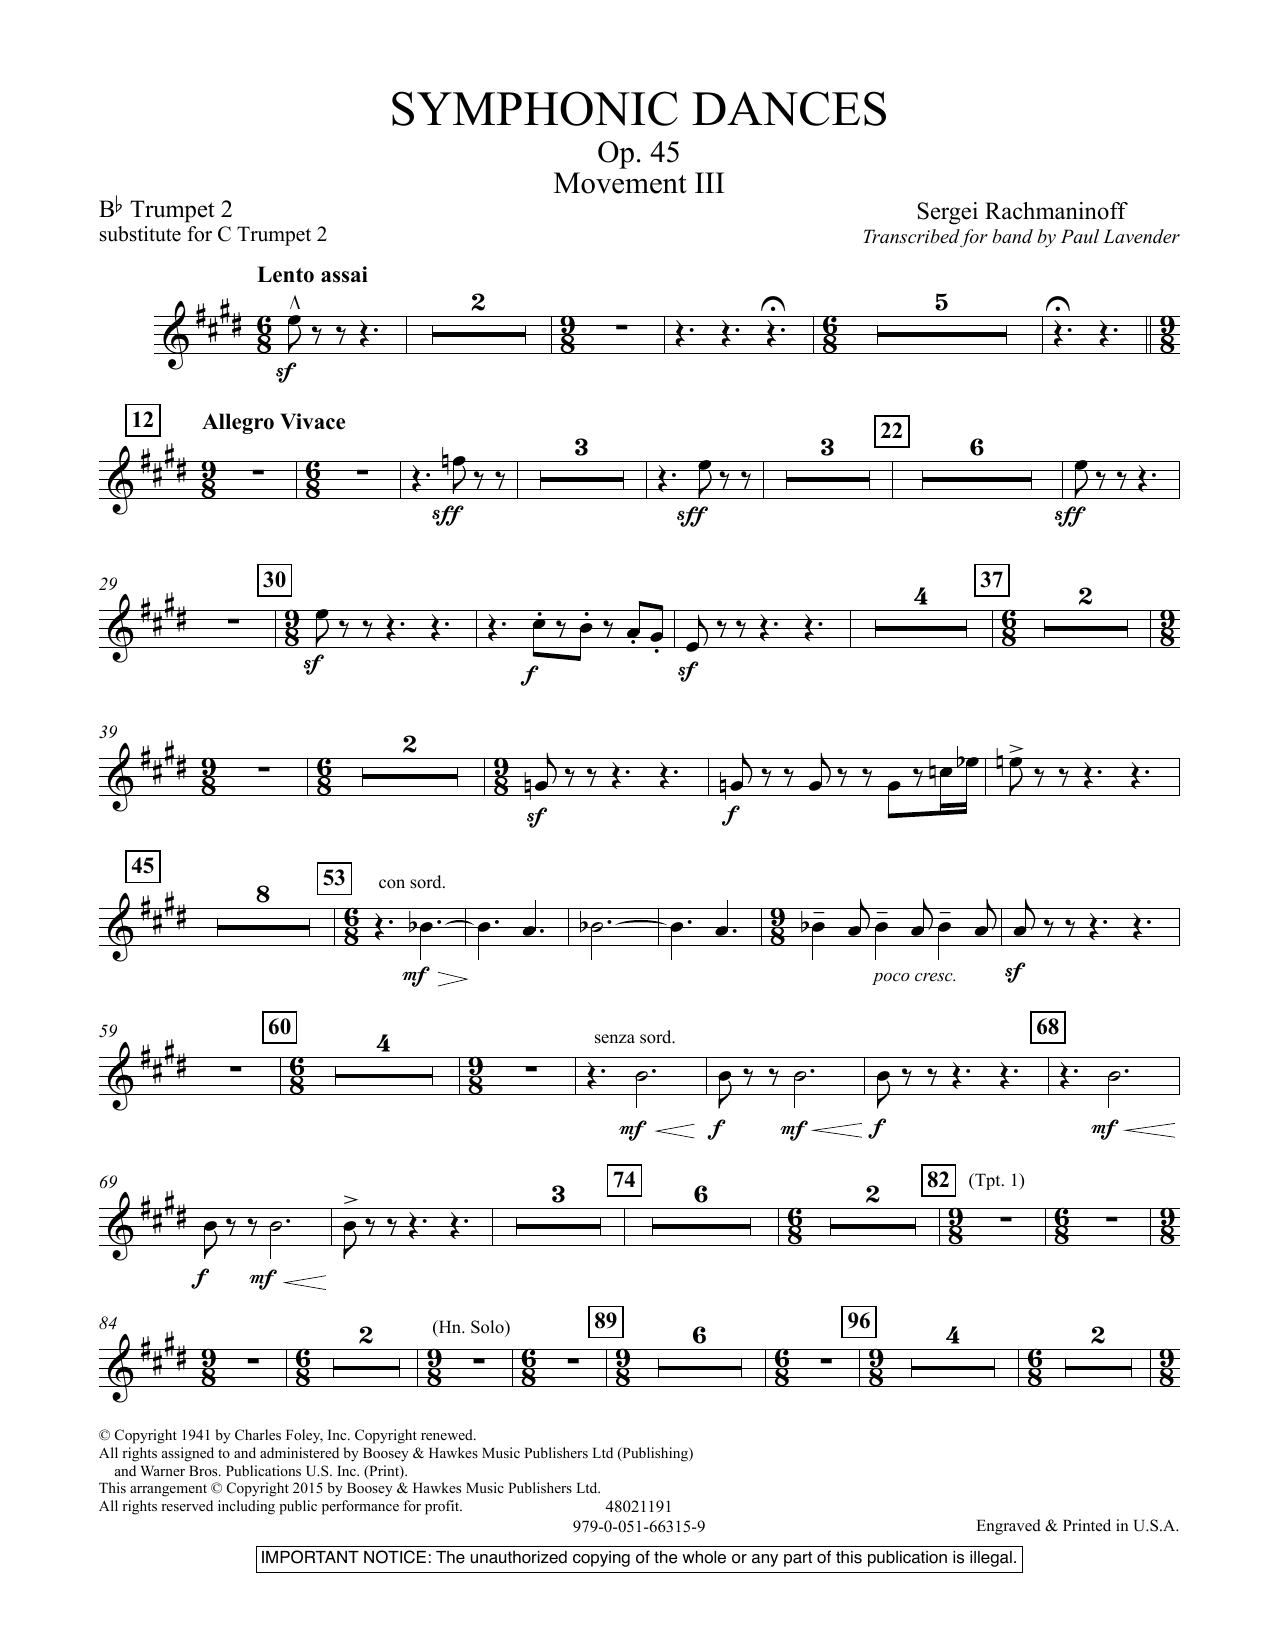 Paul Lavender Symphonic Dances, Op.45 - Bb Trumpet Parts - Digital Only - Bb Trumpet 2 (sub. C Tpt. 2) Sheet Music Notes & Chords for Concert Band - Download or Print PDF